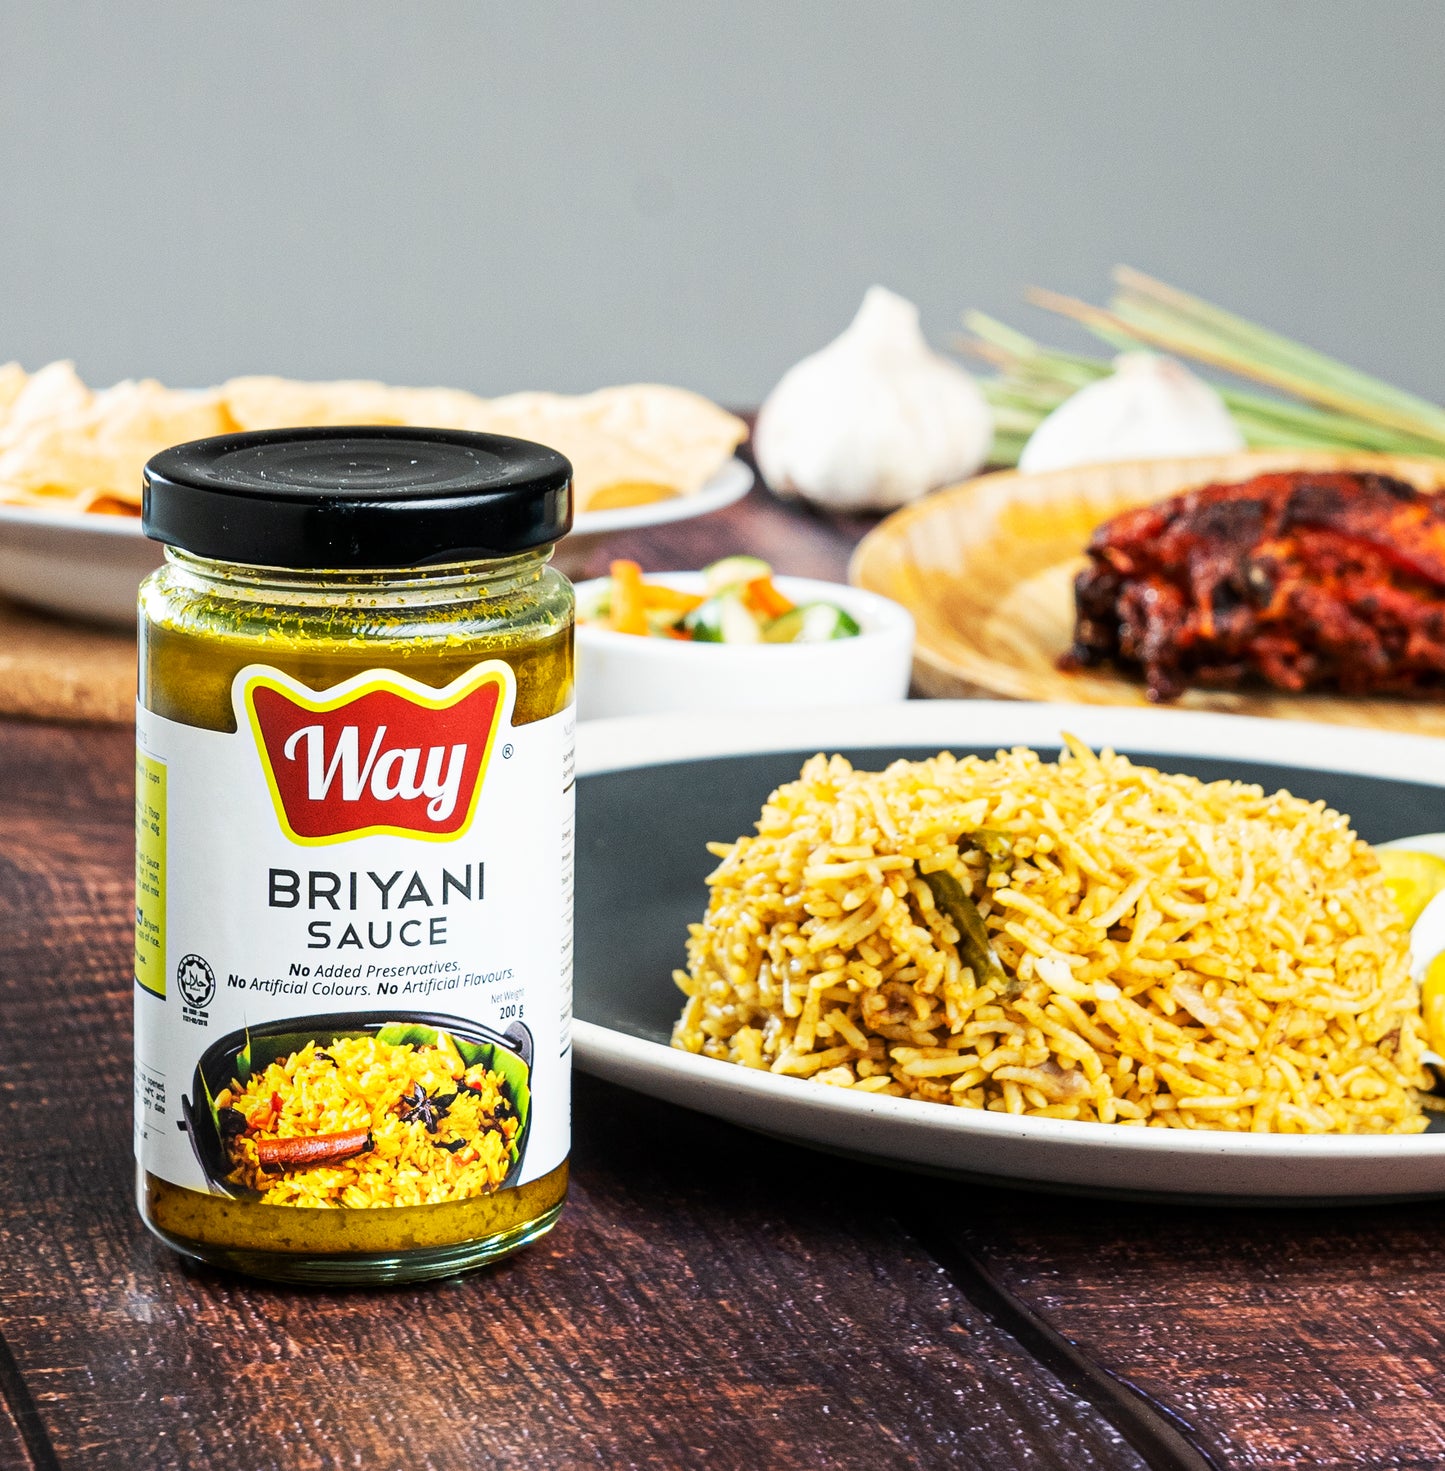 Briyani Sauce 印度香饭酱 [ 2x200g ]